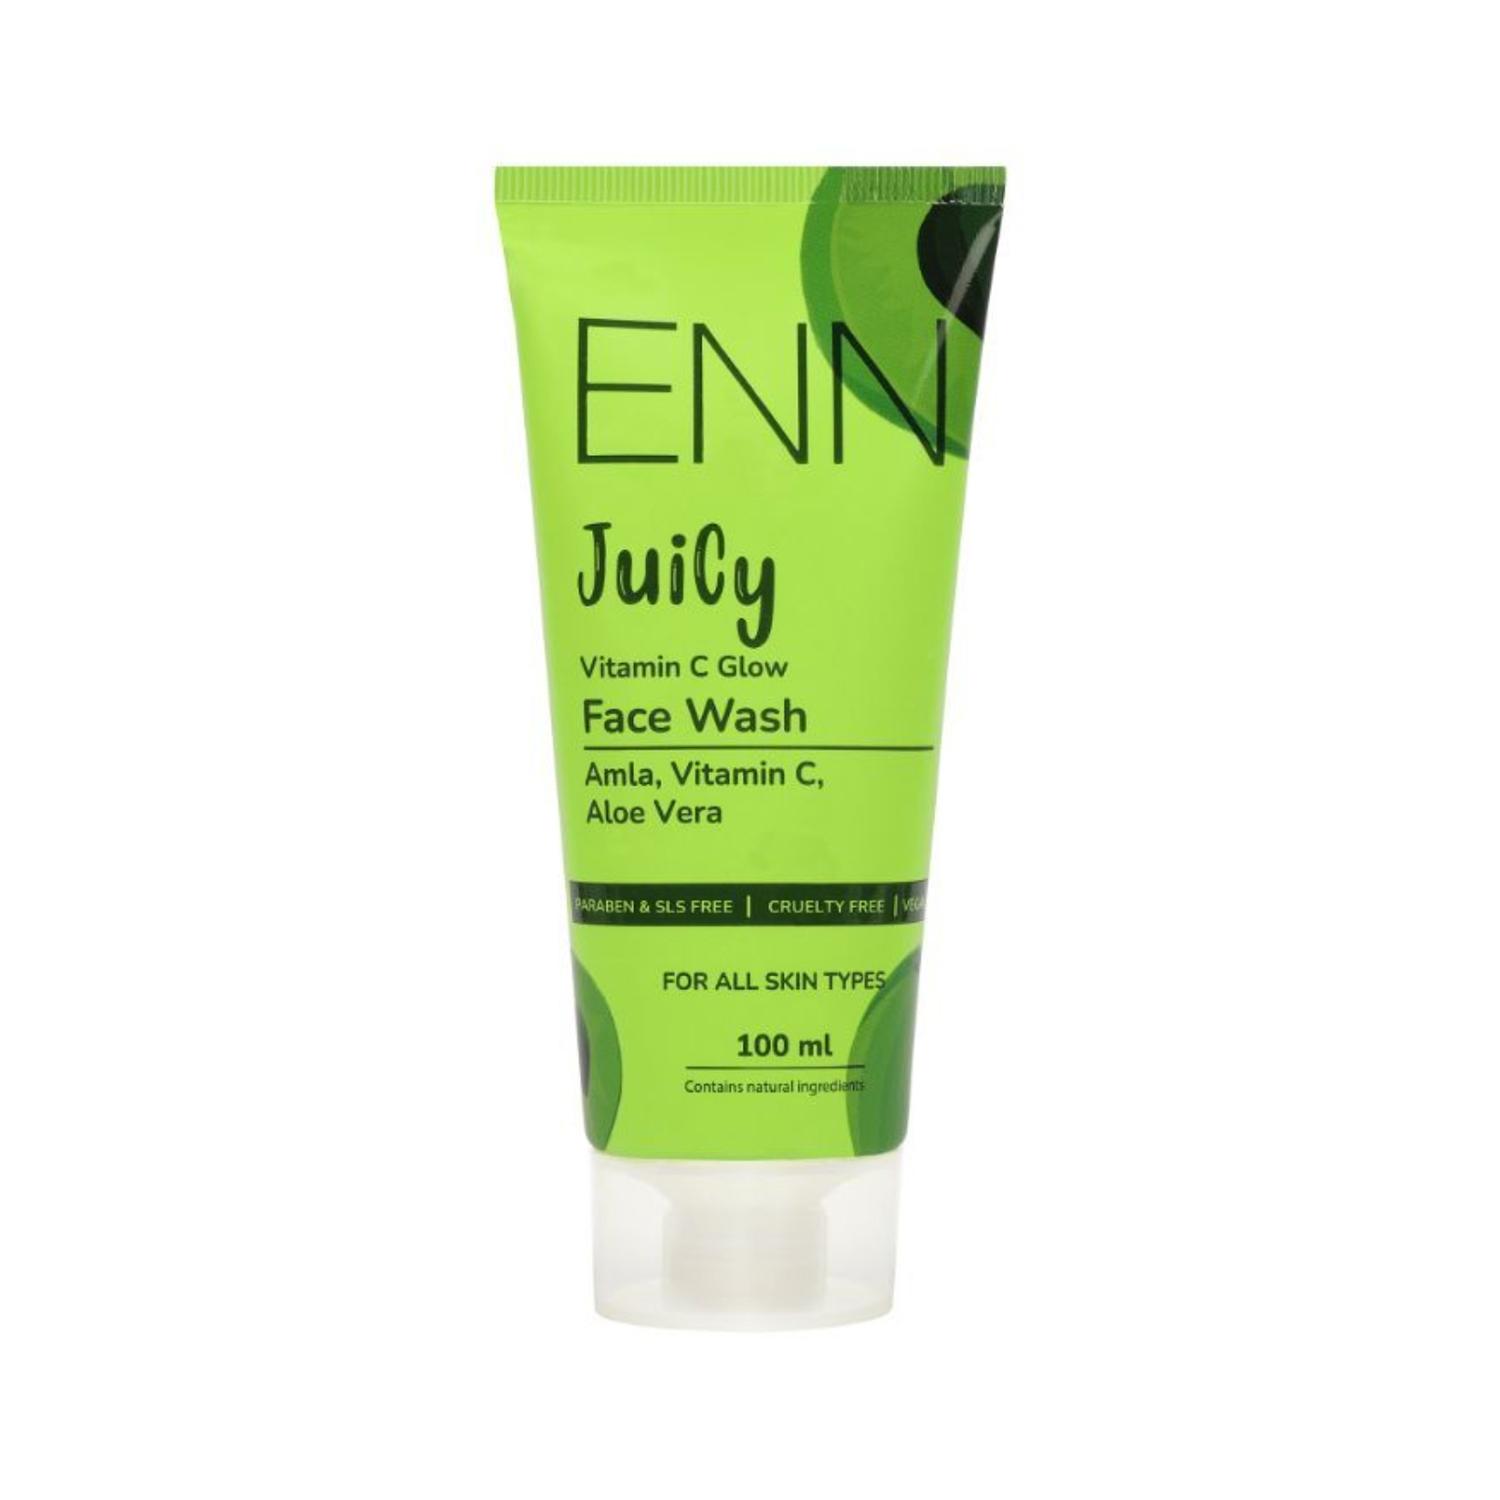 enn-juicy-vitamin-c-glow-face-wash-(100ml)